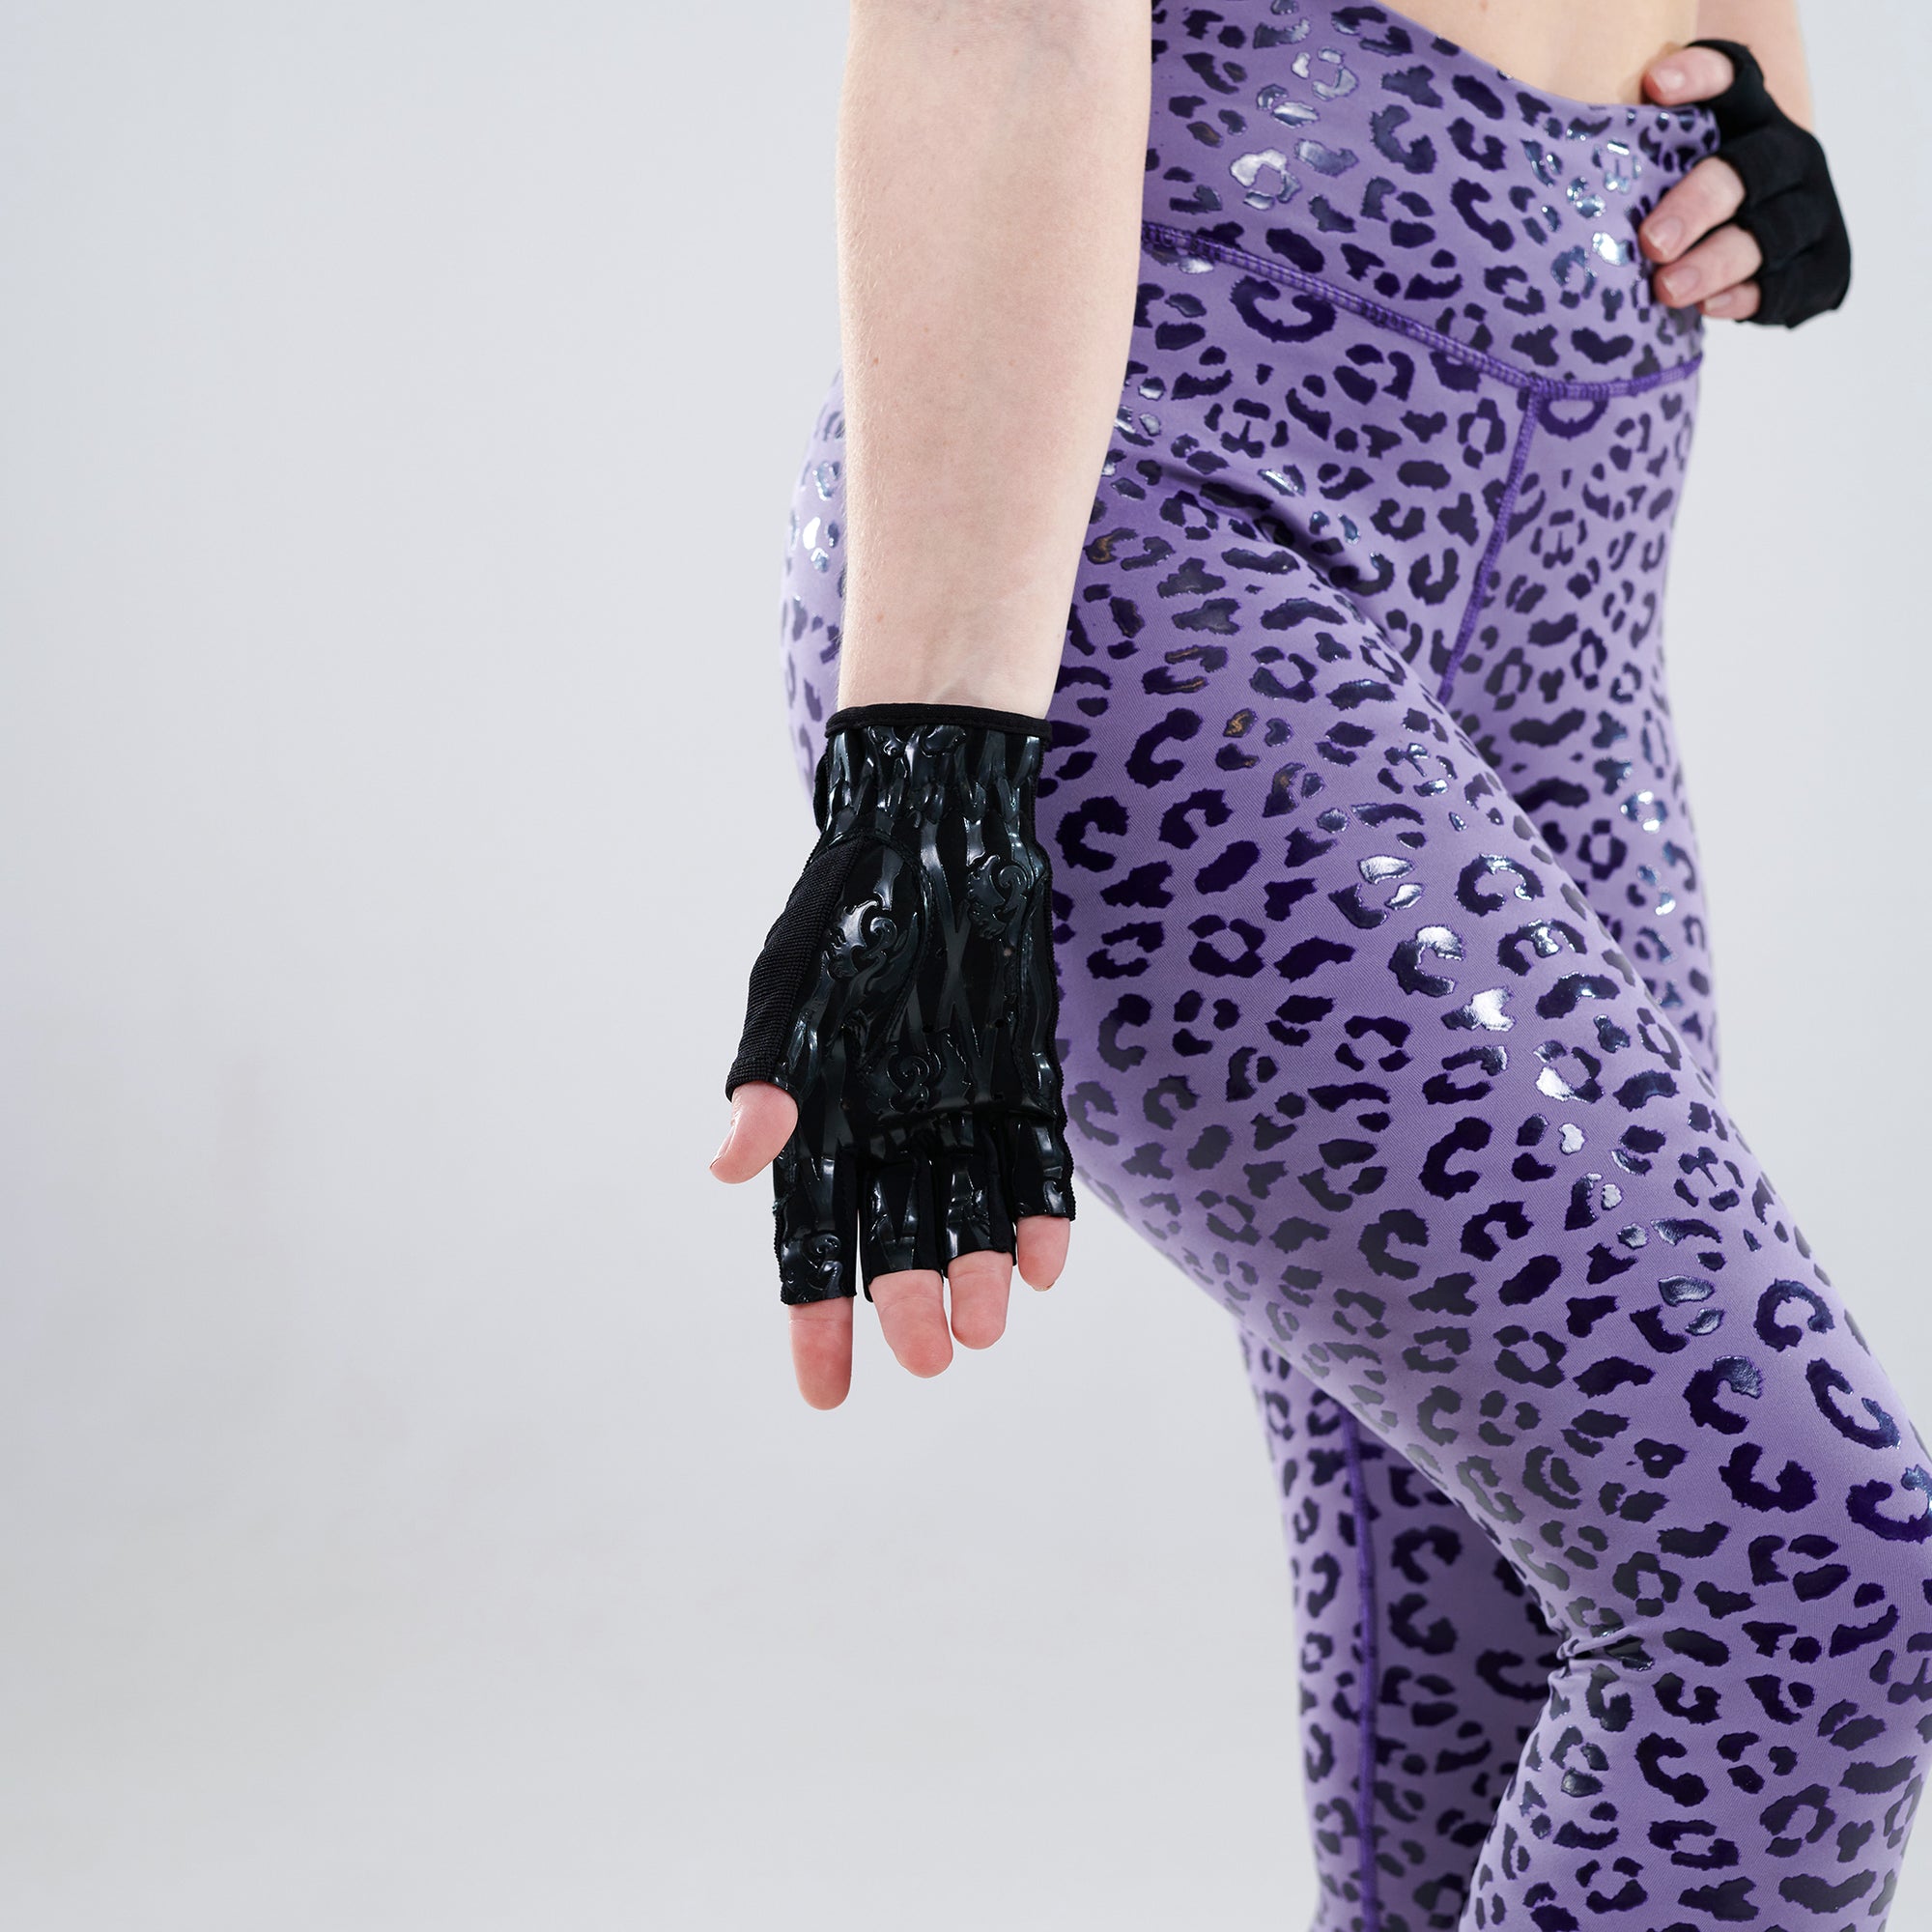 Purple and Black Aztec Print Leggings – TheBrownEyedGirl Boutique